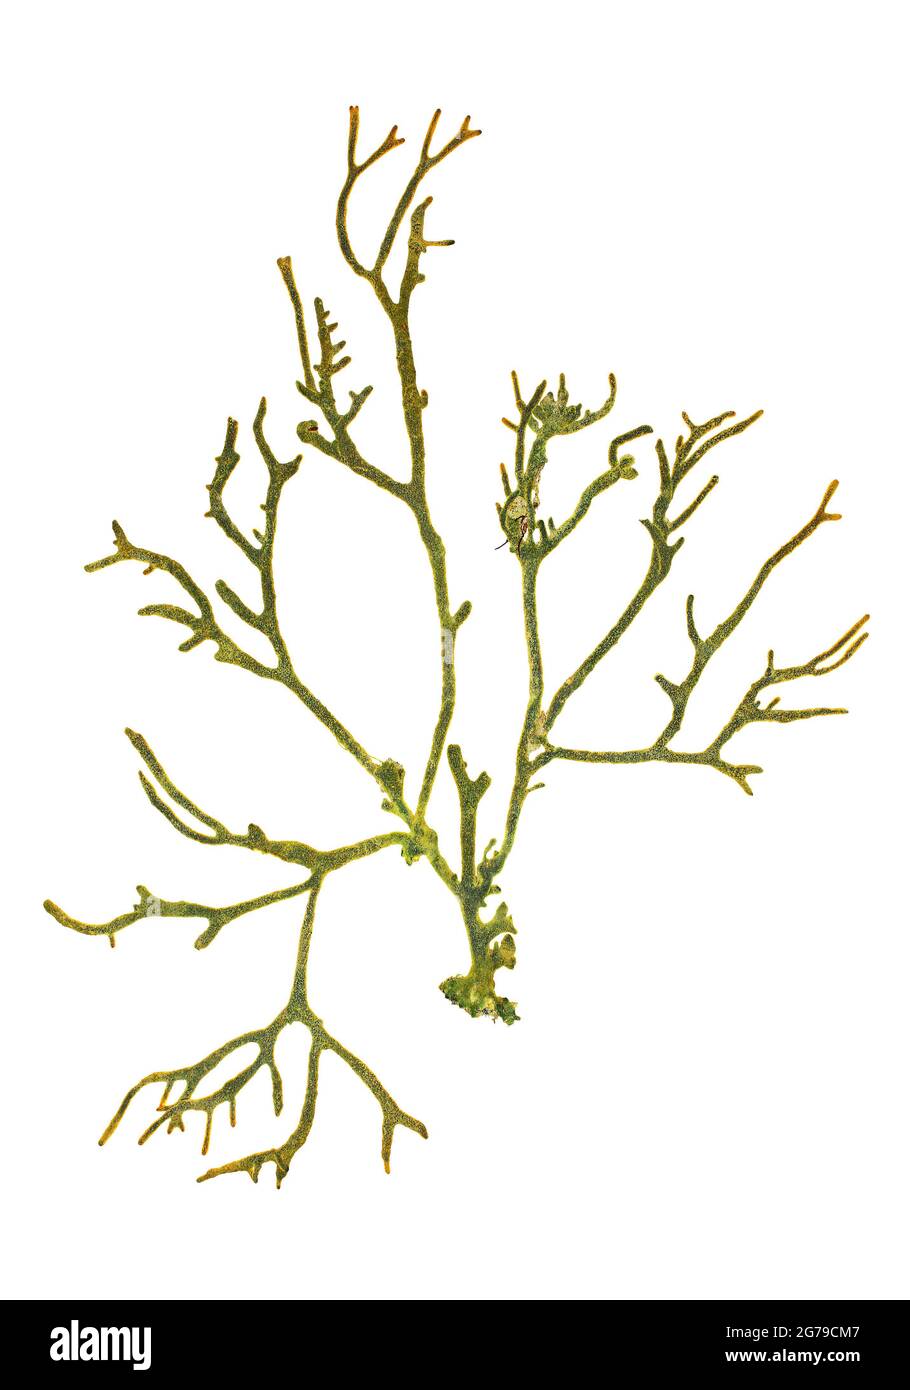 Codium sp., Green alga (Chlorophyta, Ulvophyceae) Stock Photo